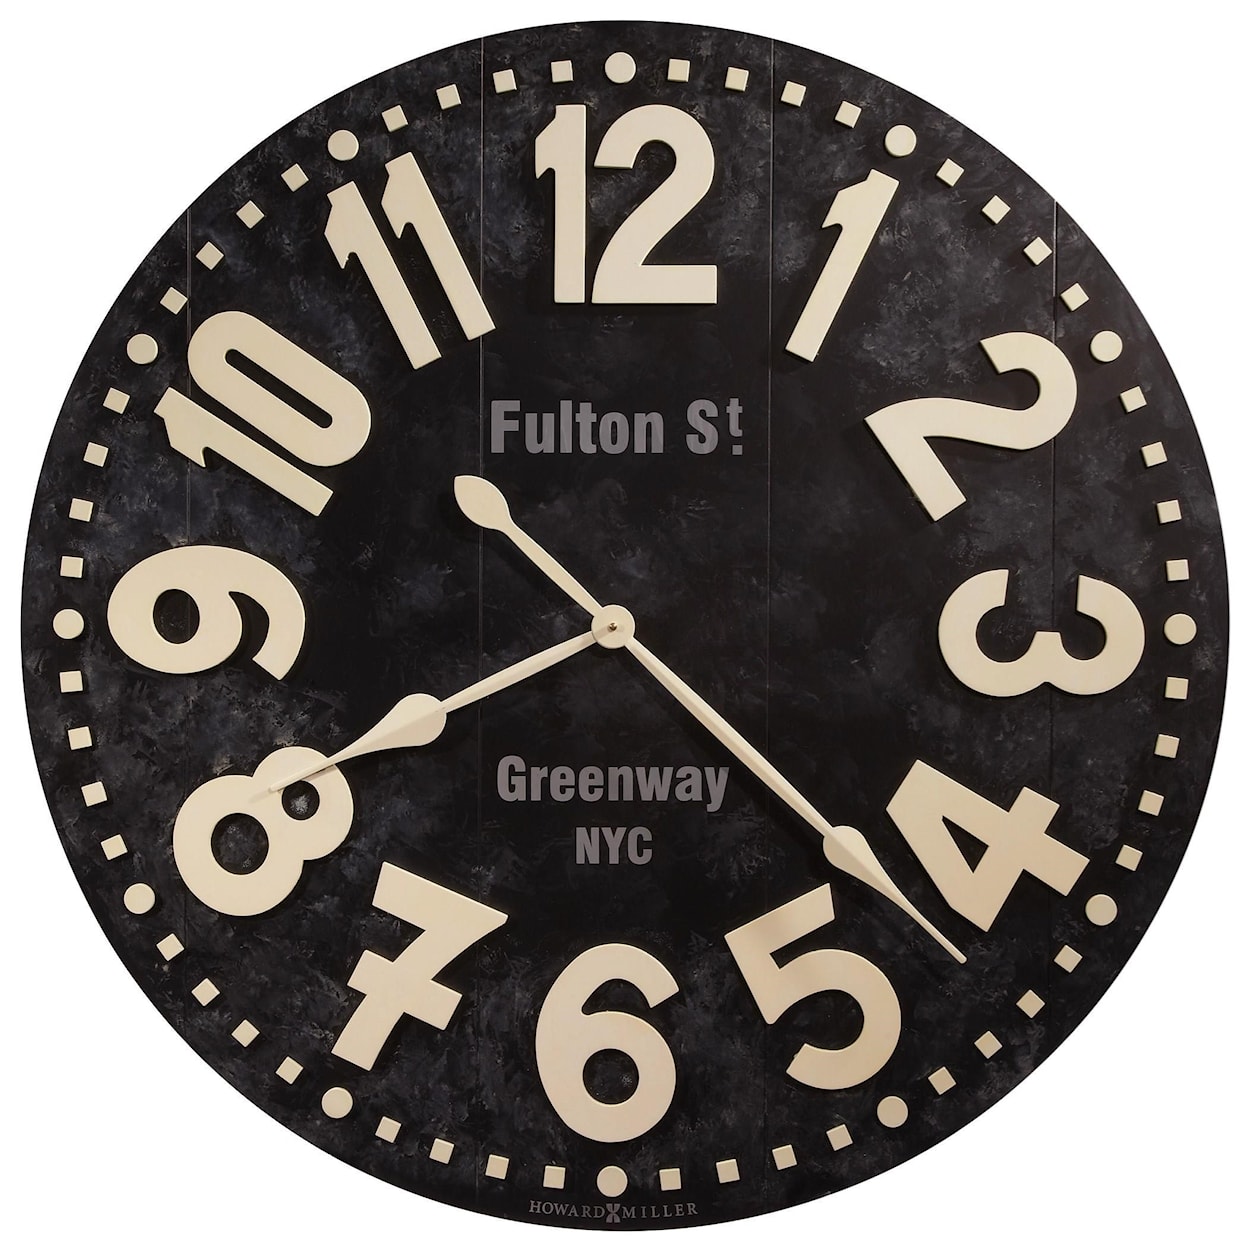 Howard Miller Wall Clocks Fulton Street Wall Clock